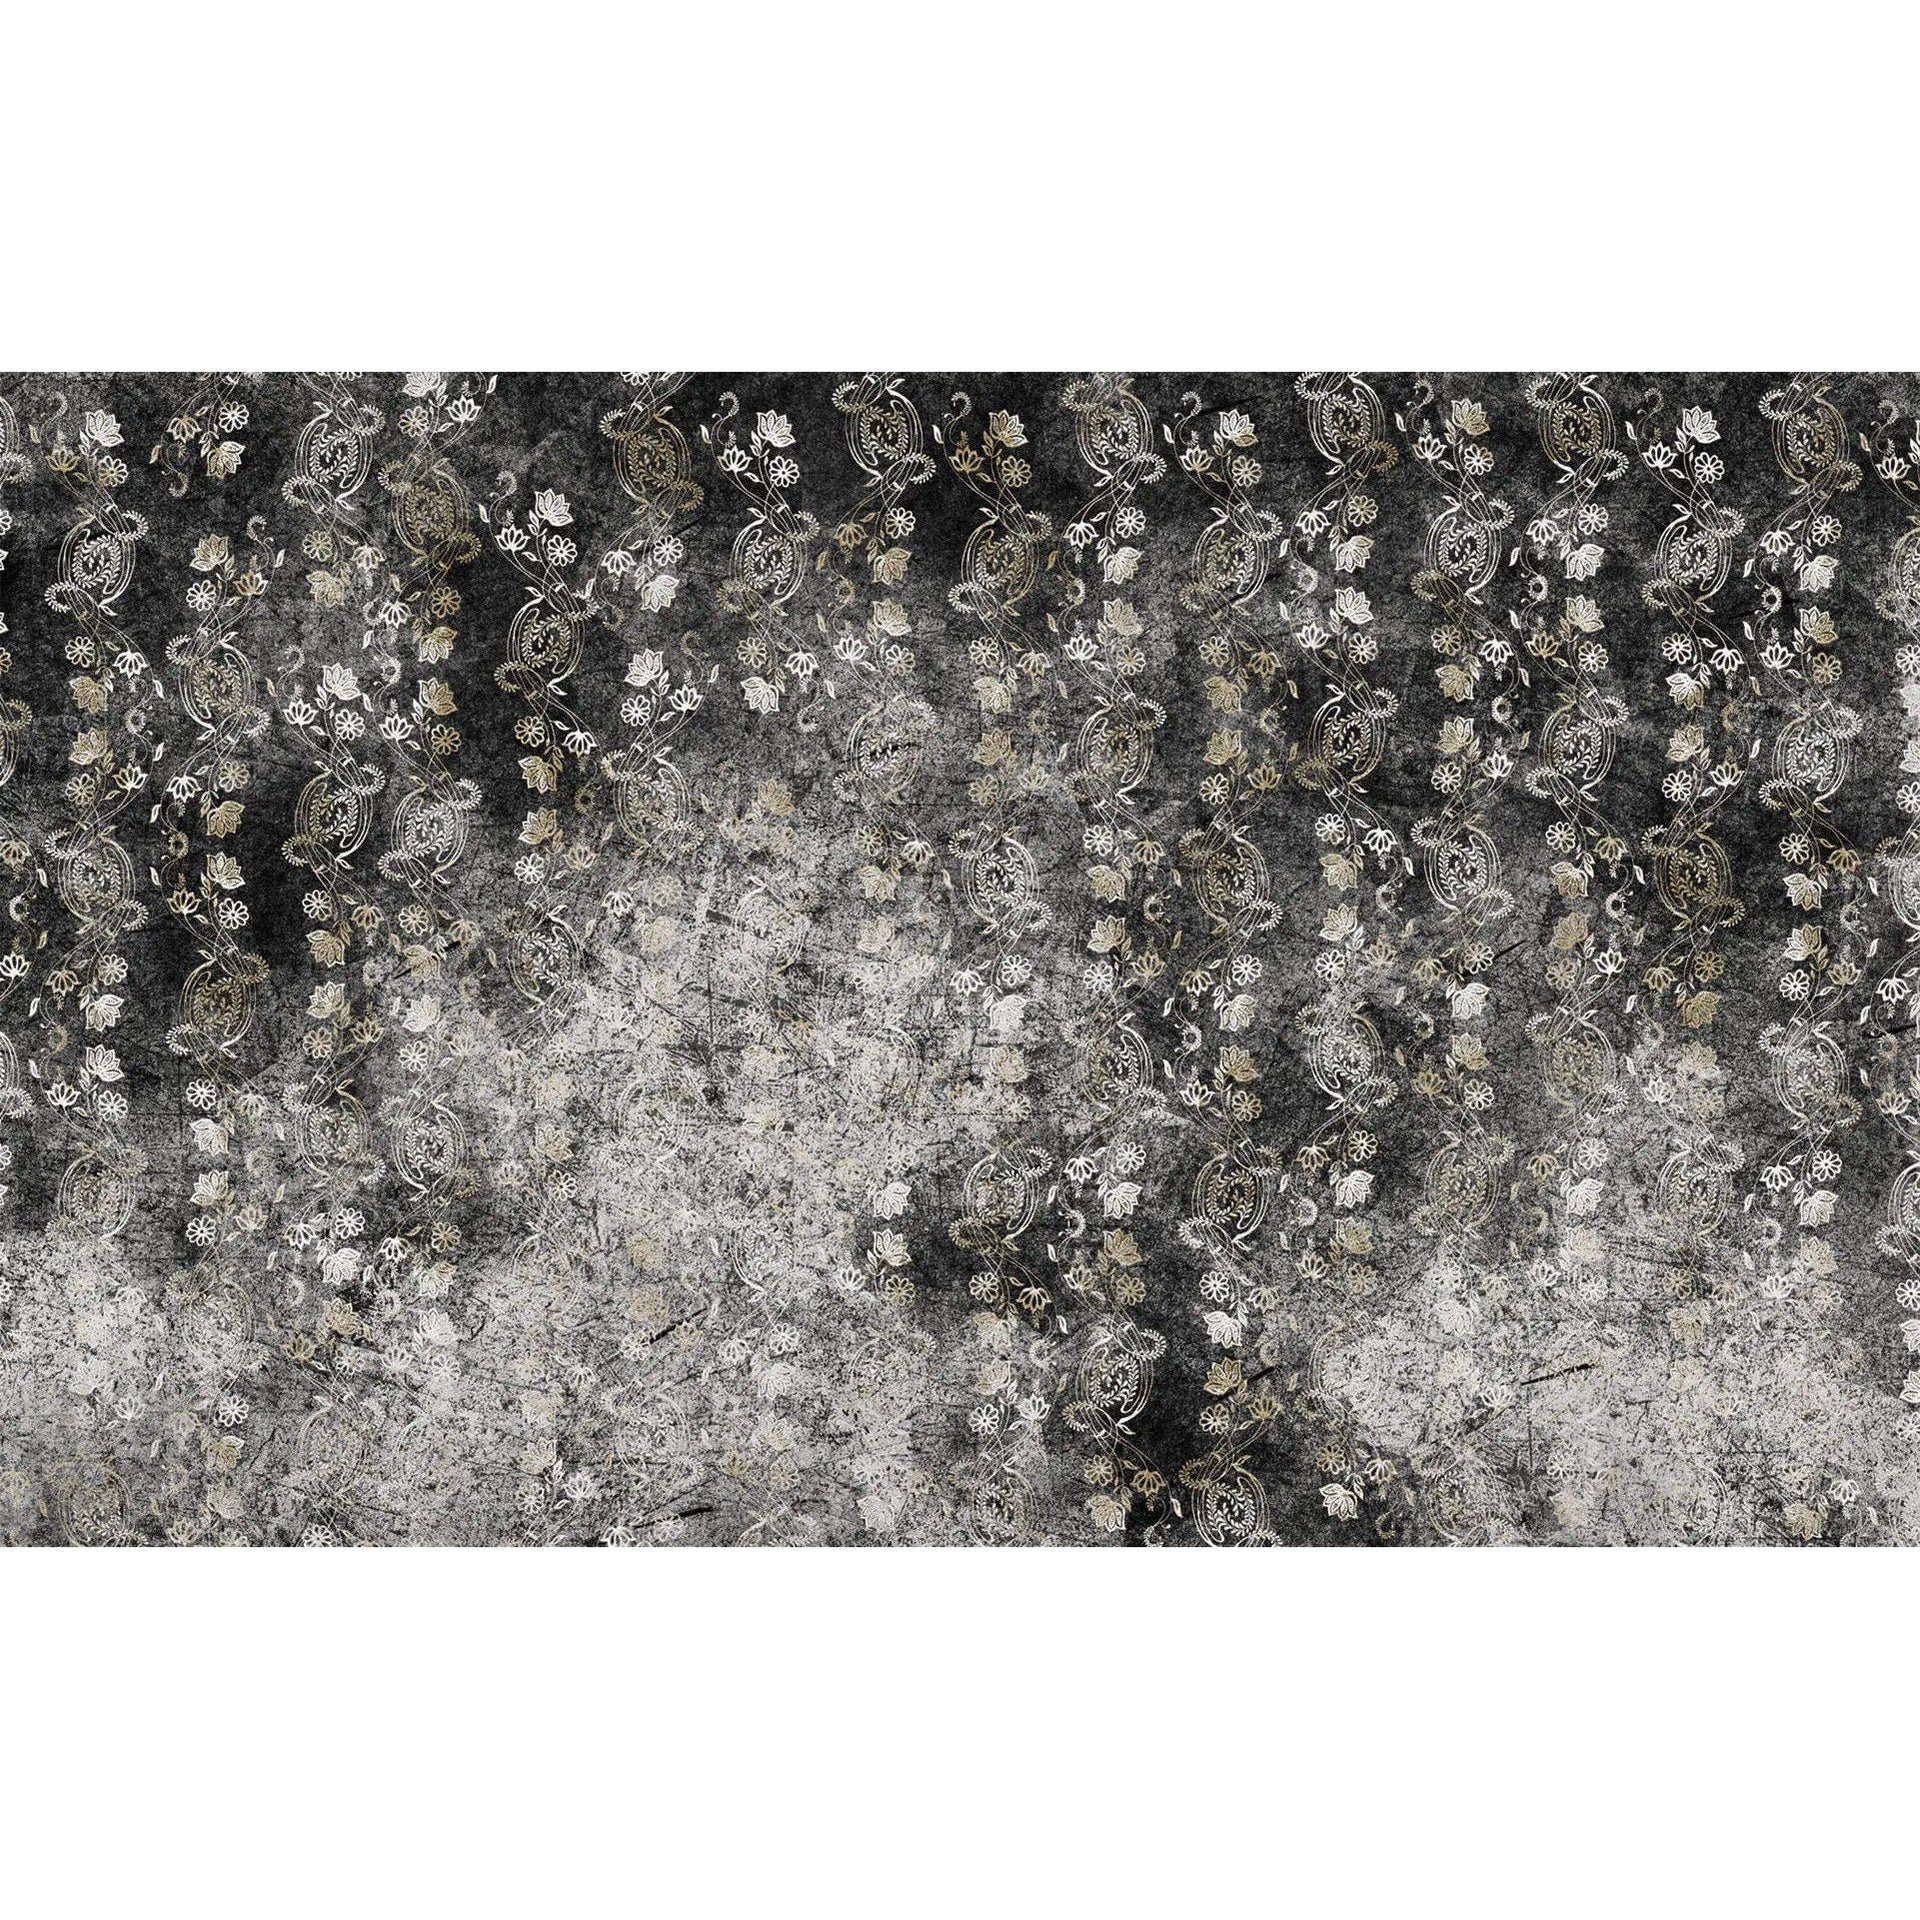 Ethereal-Digital Wallpaper-Skinwall-Grey 2-17B